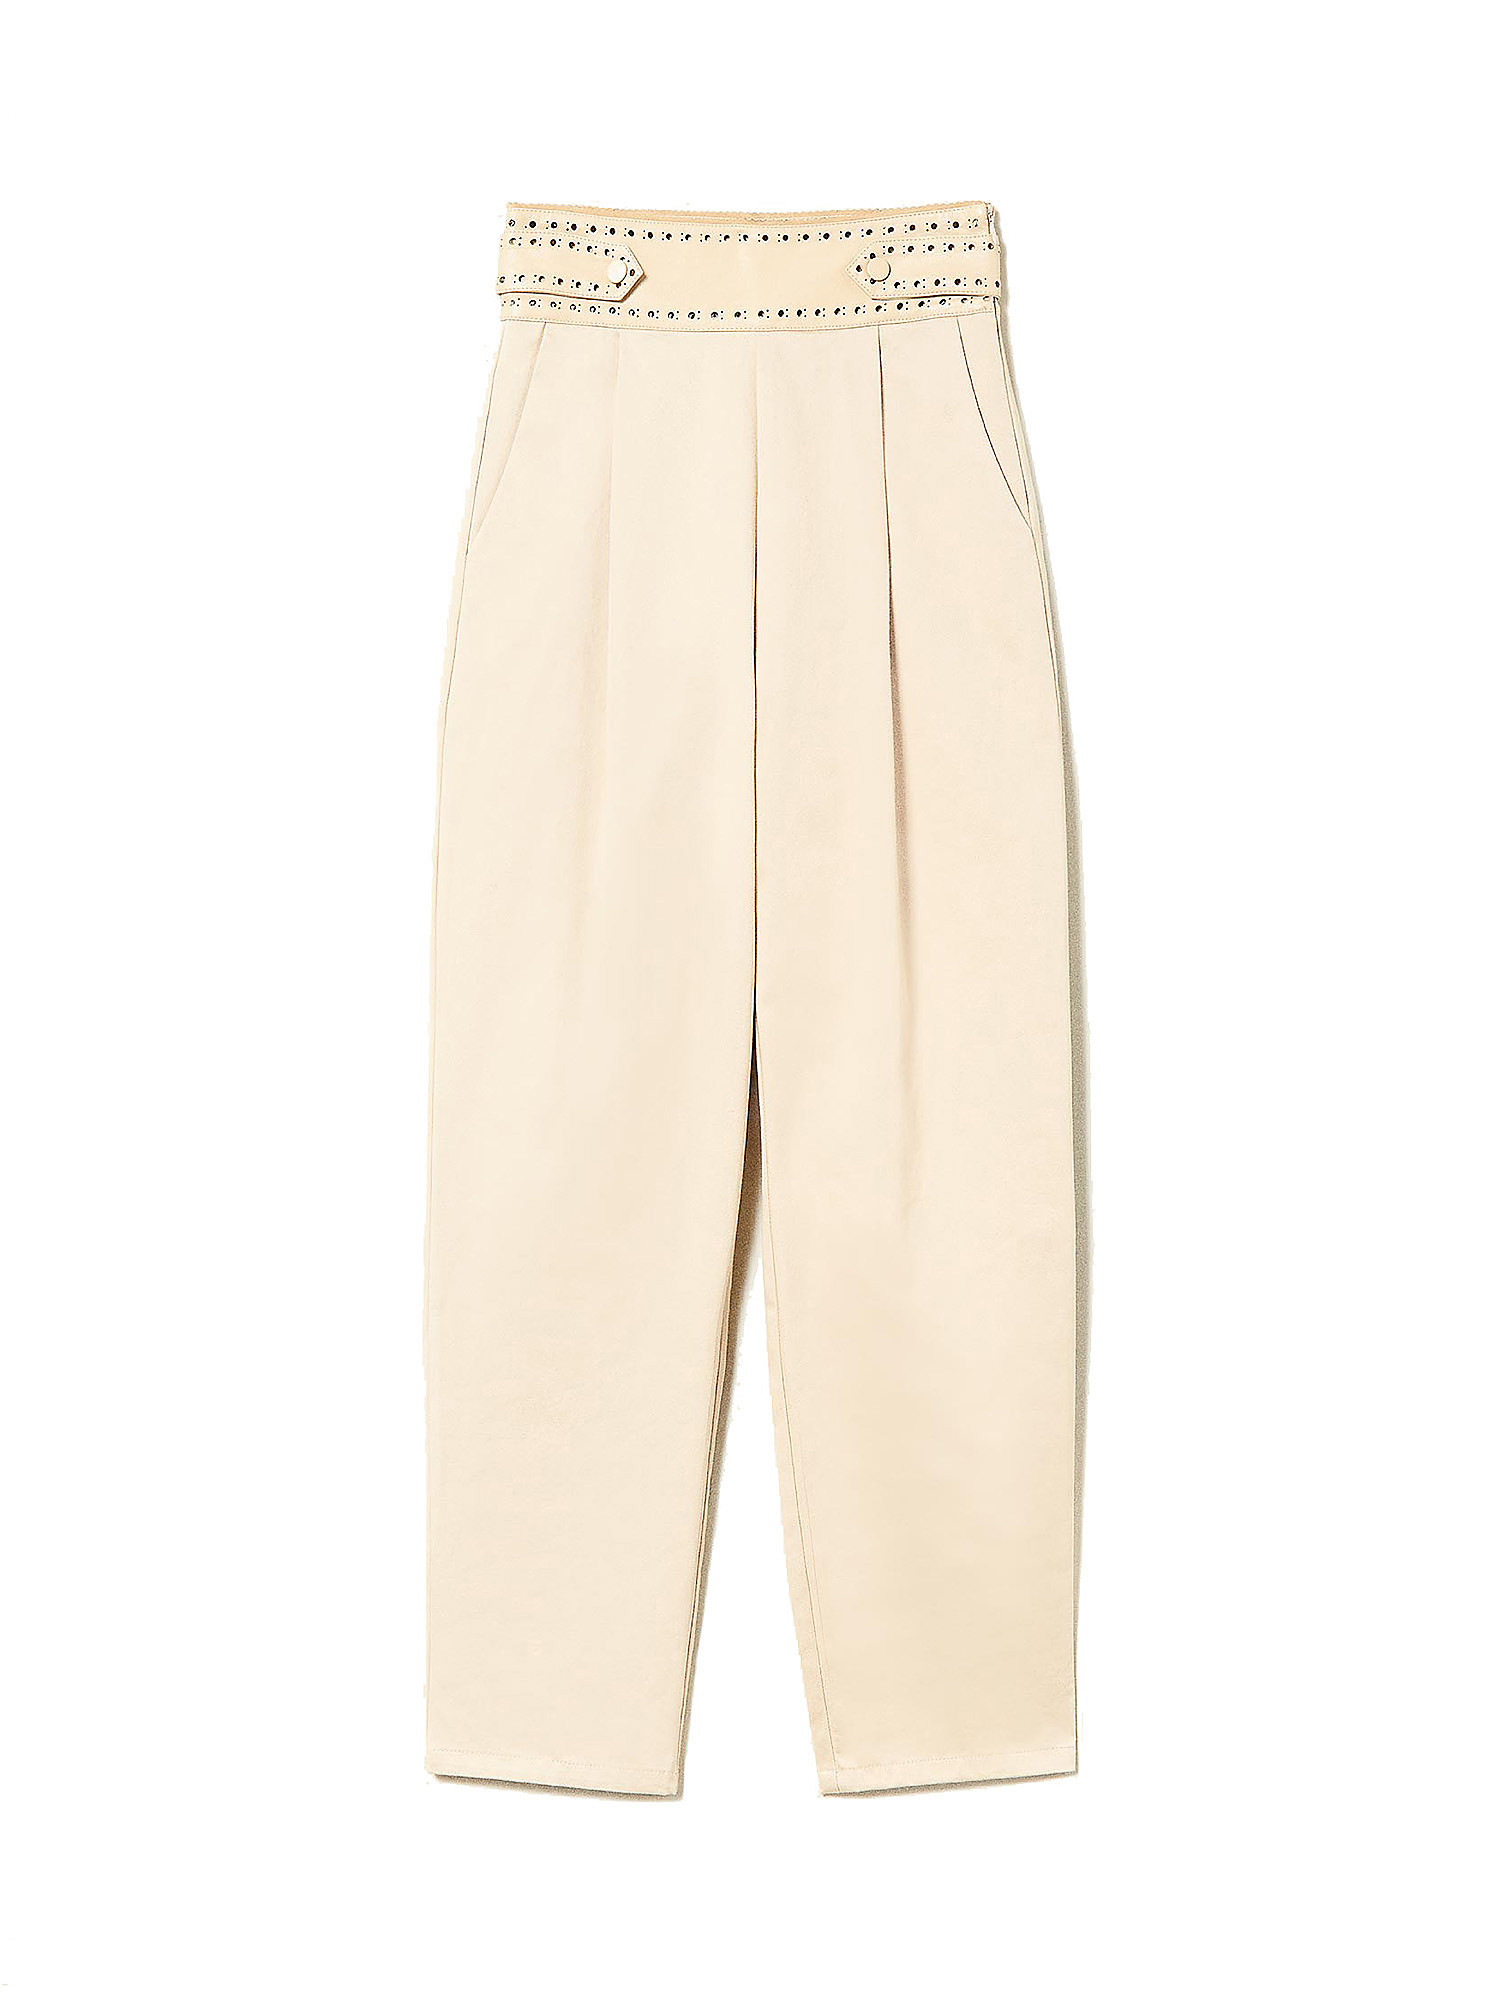 Pantalone con ricami traforati, Crema, large image number 0